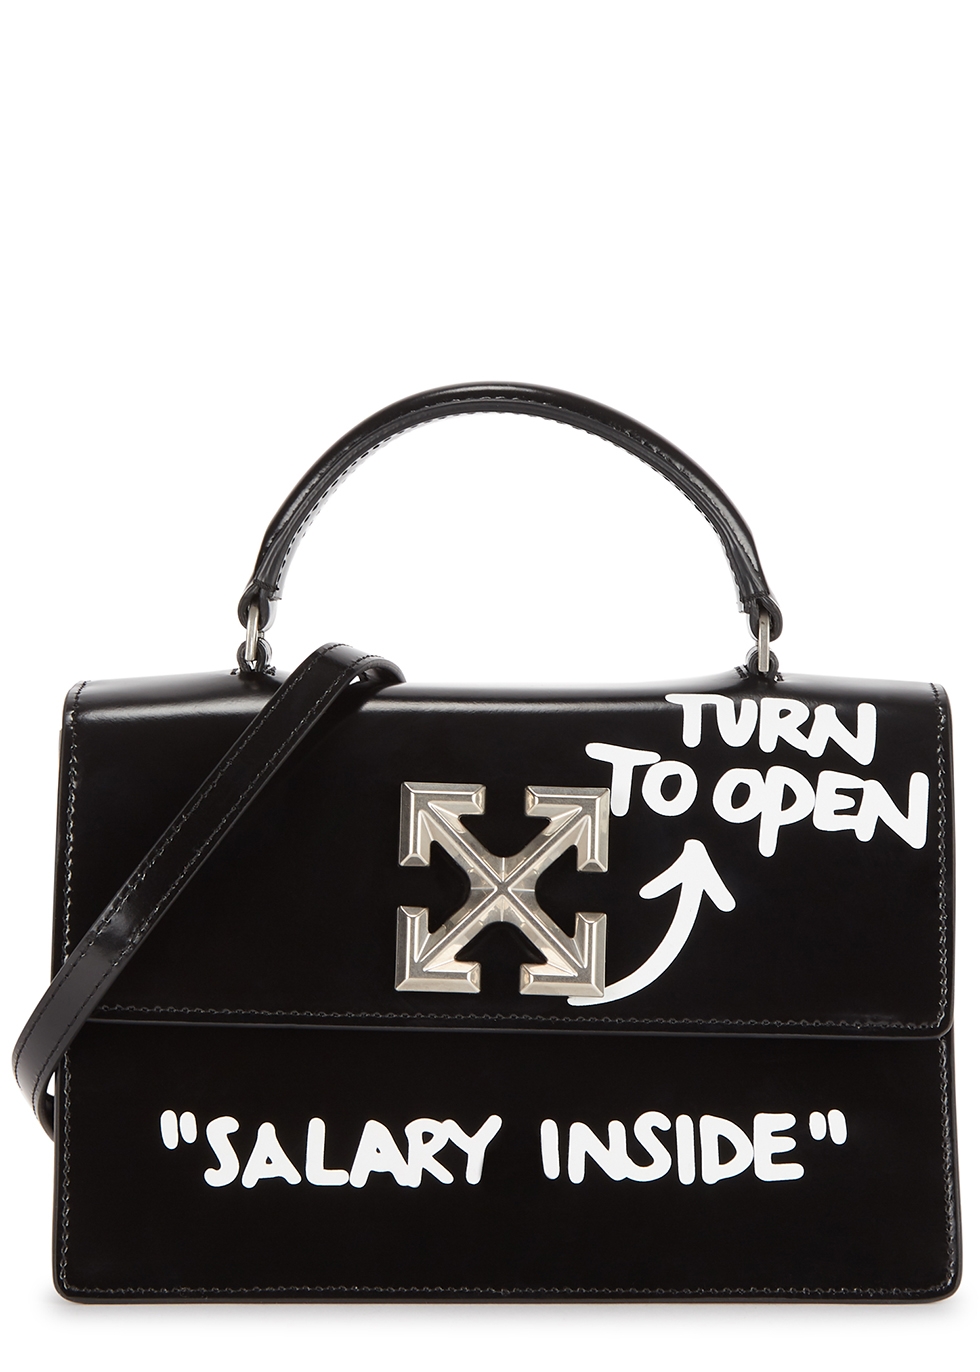 Off-White Jitney 1.4 black leather top handle bag - Harvey Nichols